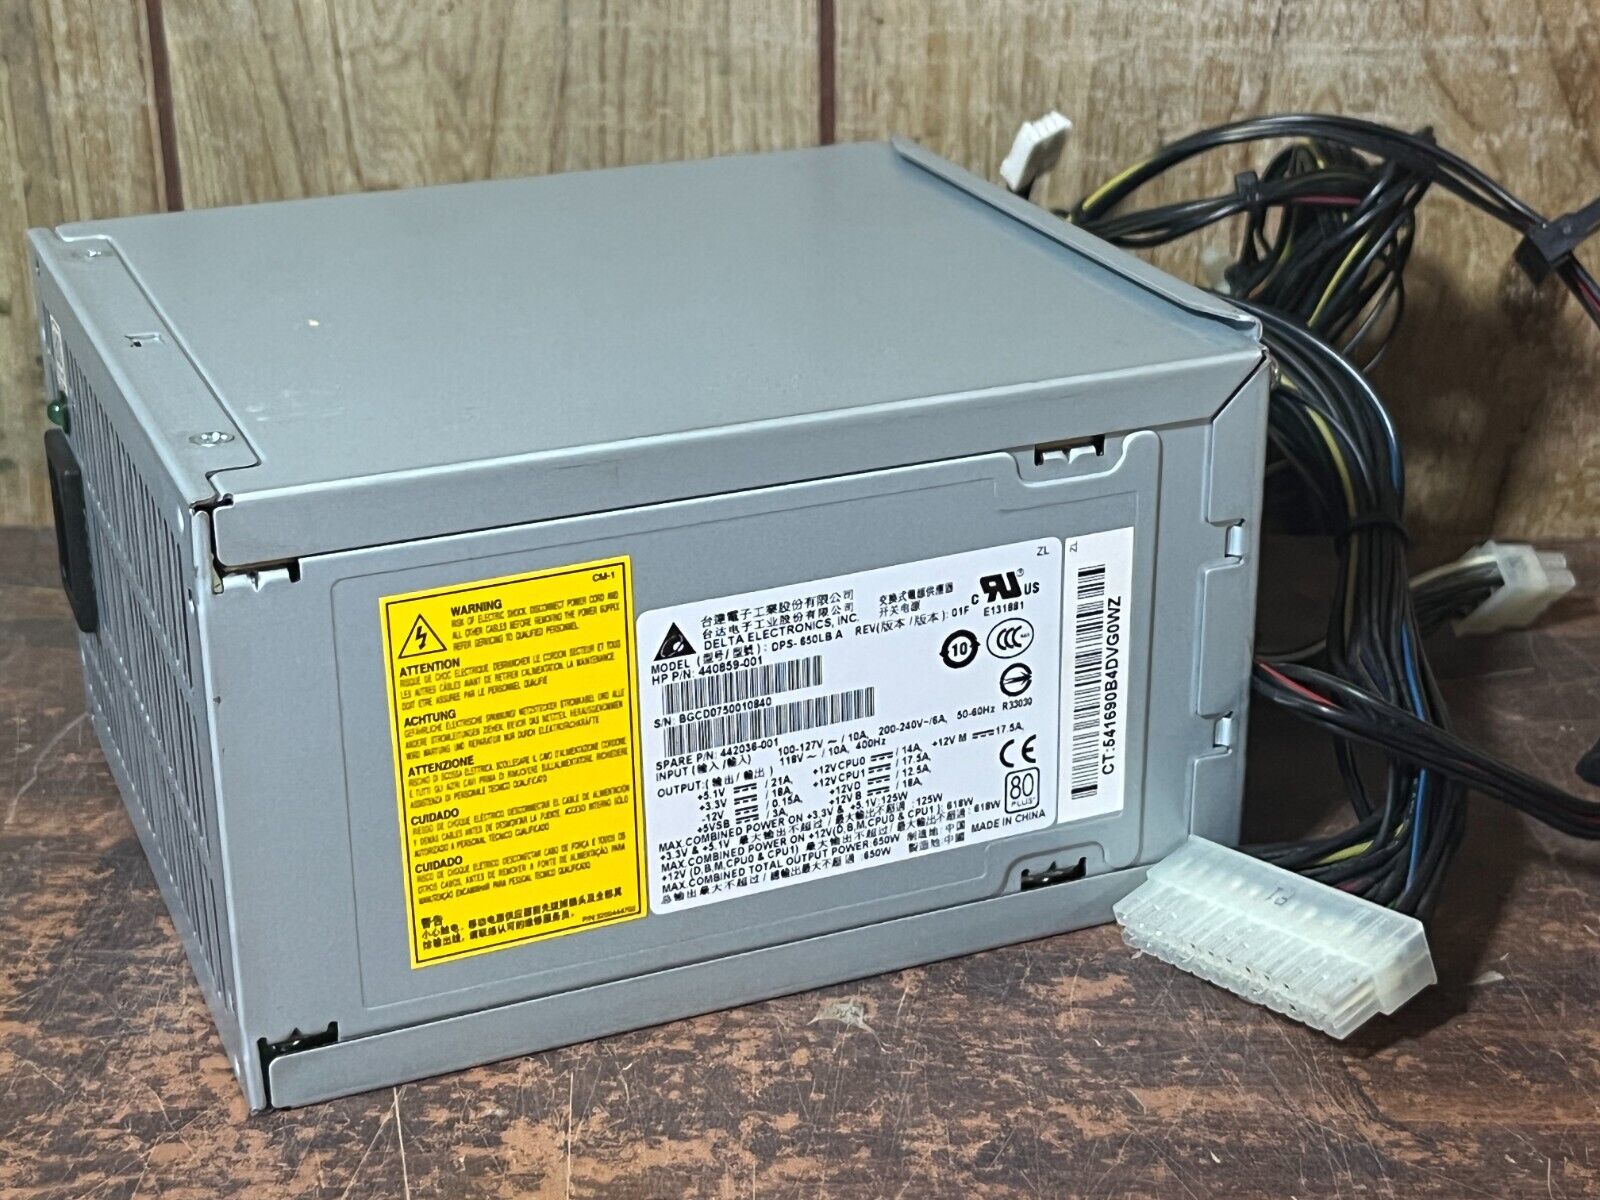 HP XW6600 Workstation Power Supply 650W 442036-001 440859-001 DPS-650LB A